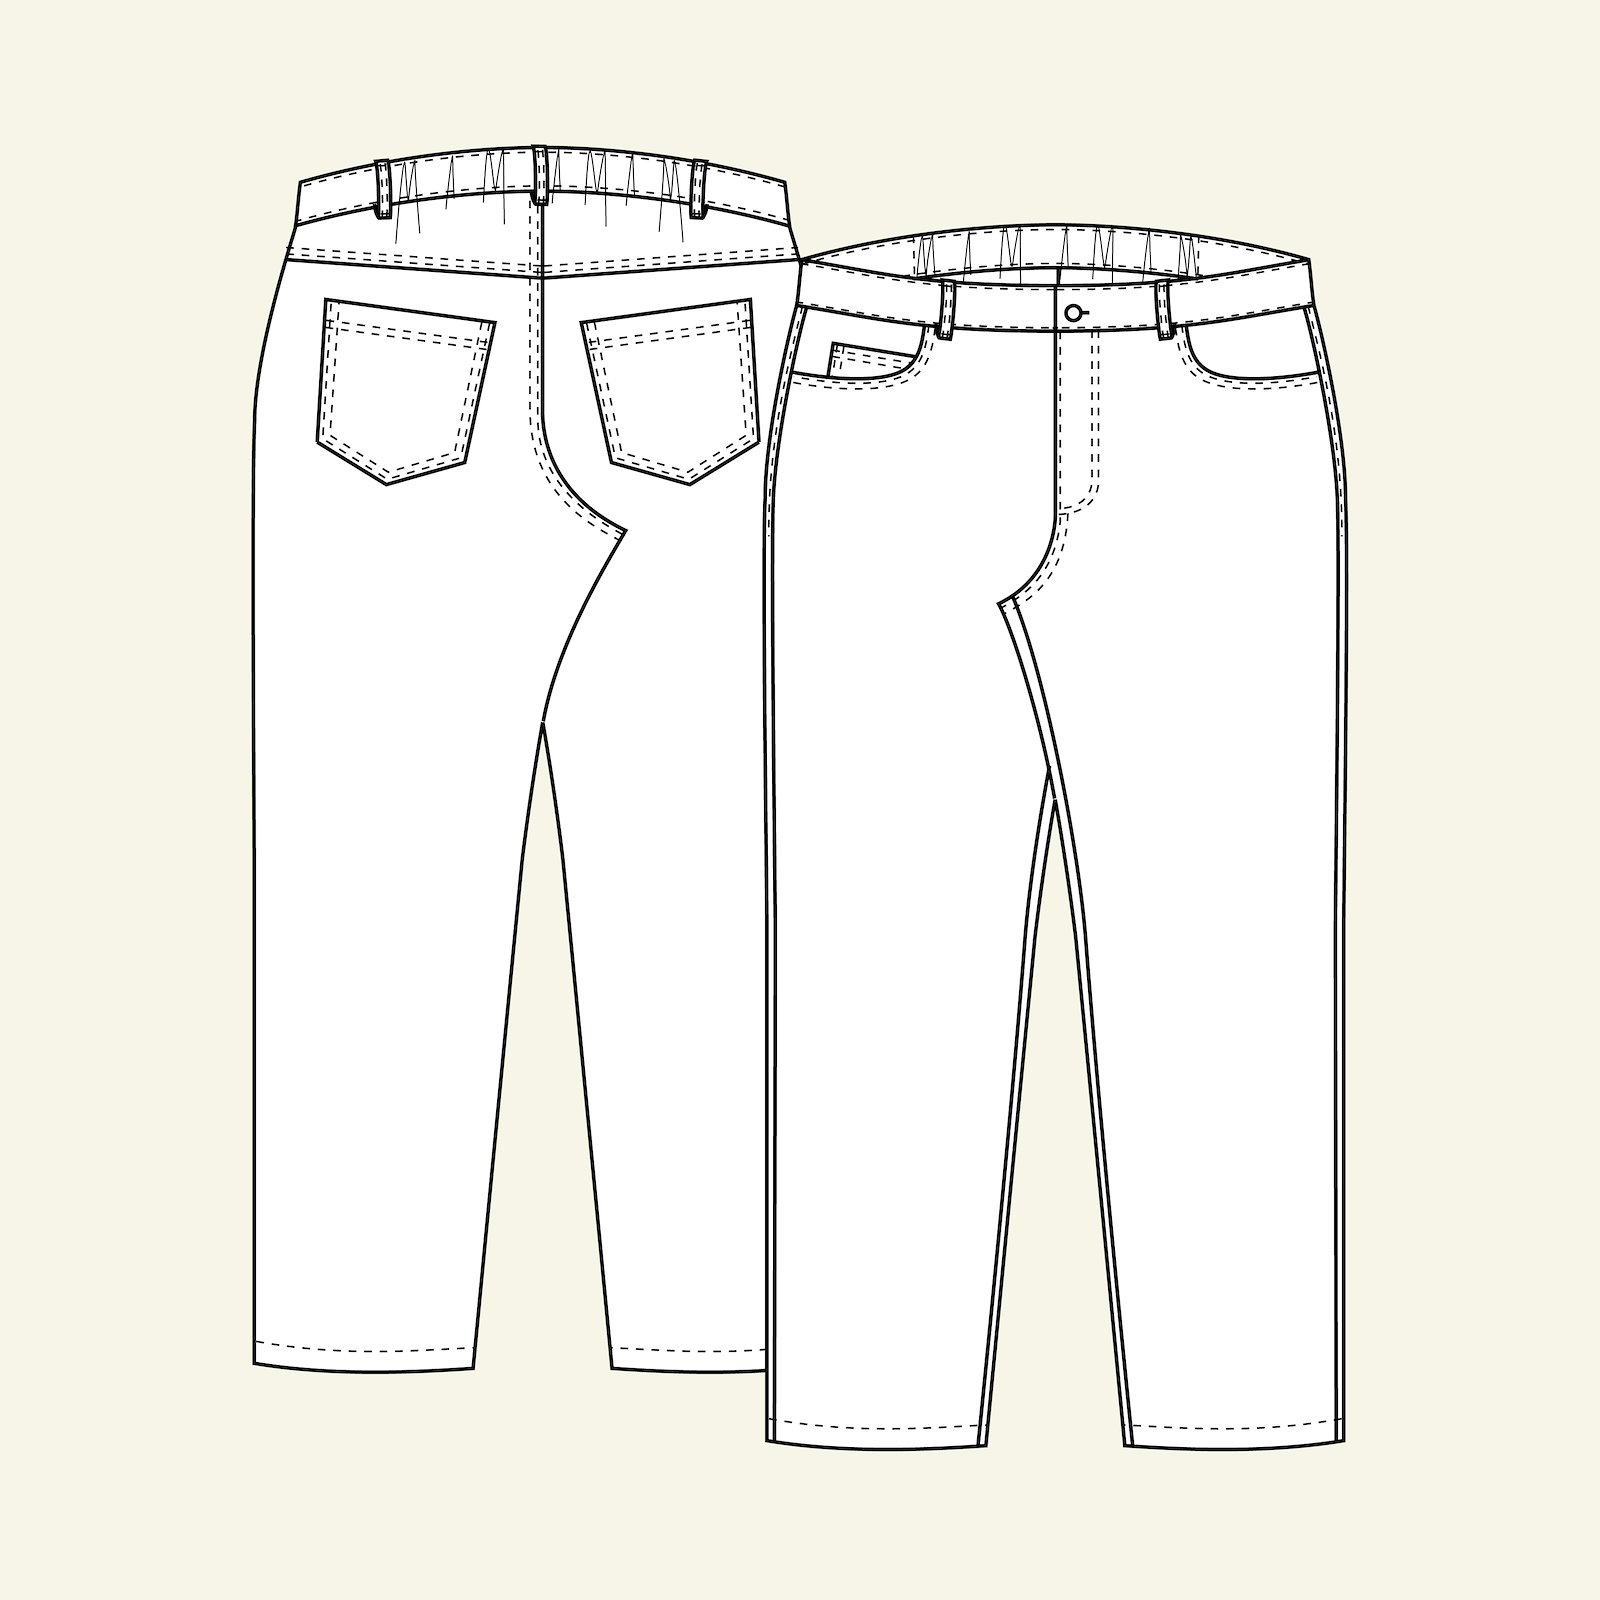 Klassisch Jeans mit Gummiband hinter, 54 p70007000_p70007001_p70007002_p70007003_p70007004_pack_b